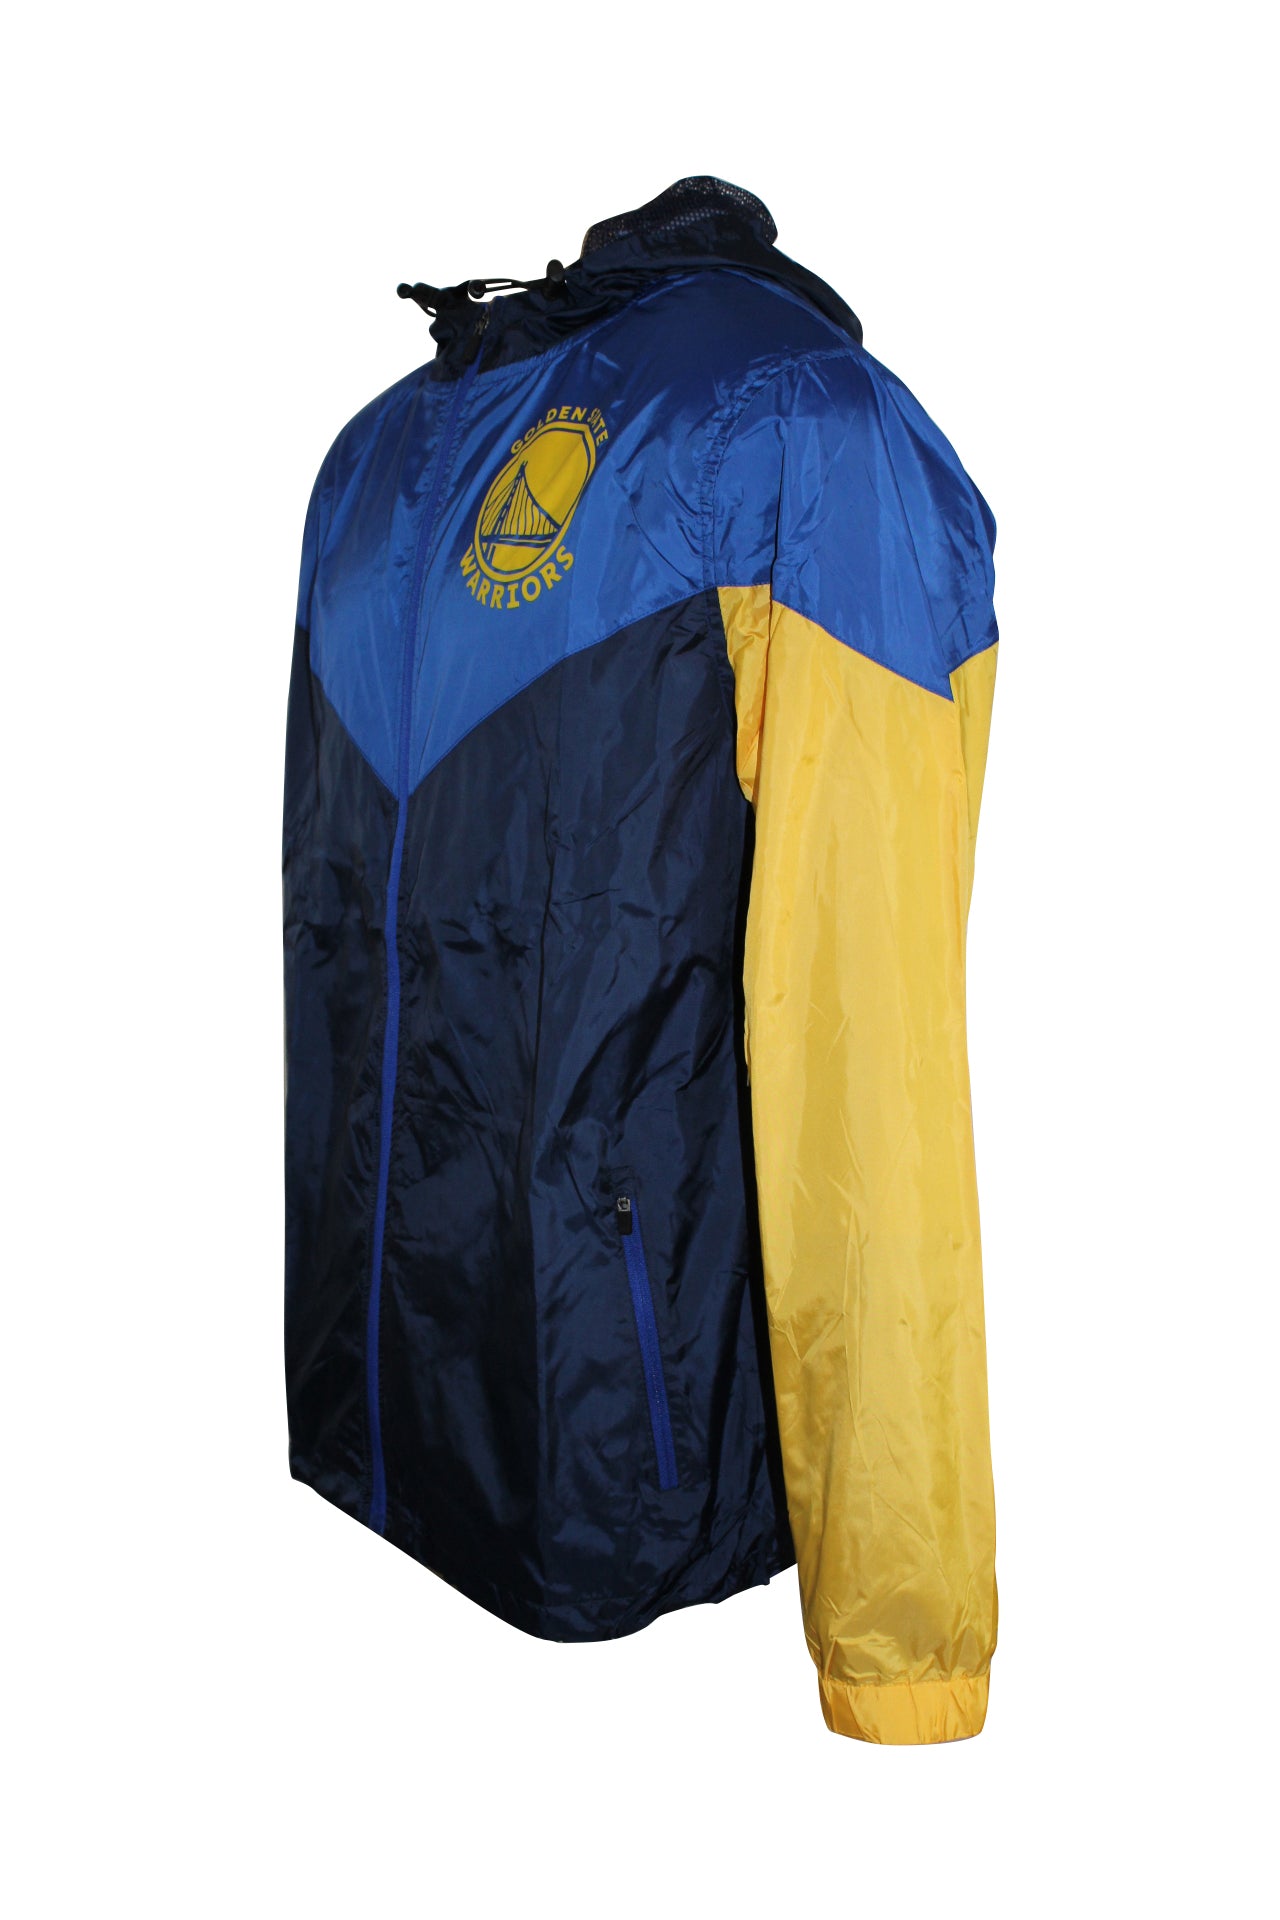 NBA Golden State Warriors Full Zip Jacket 2XL